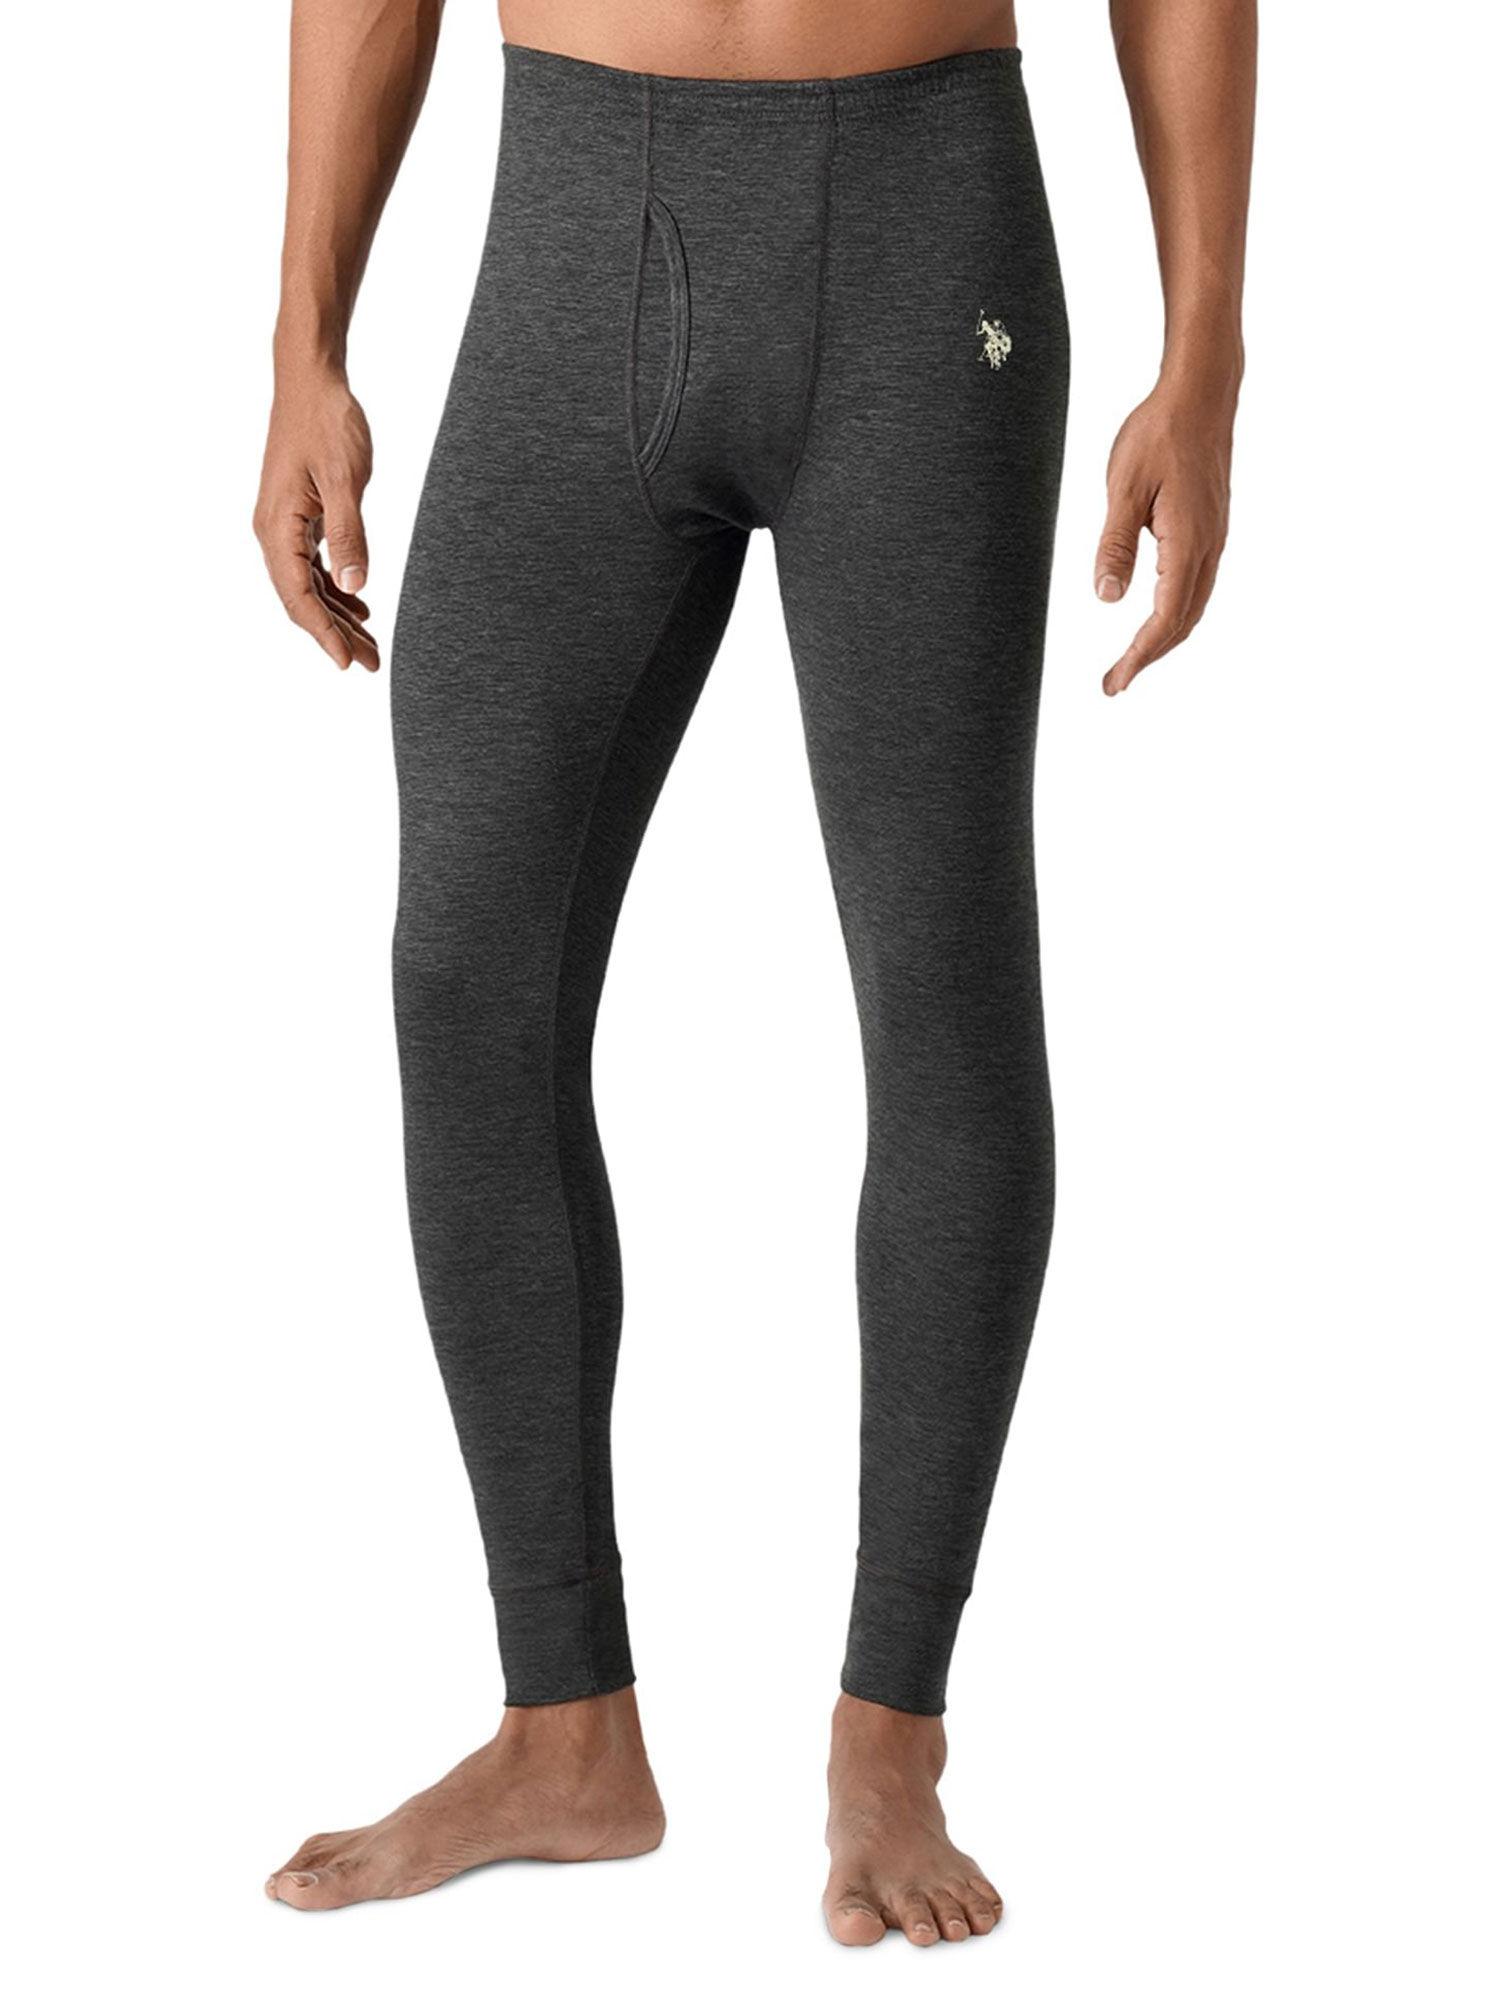 men-dark-grey-i756-mid-rise-snug-fit-heathered-thermal-pants